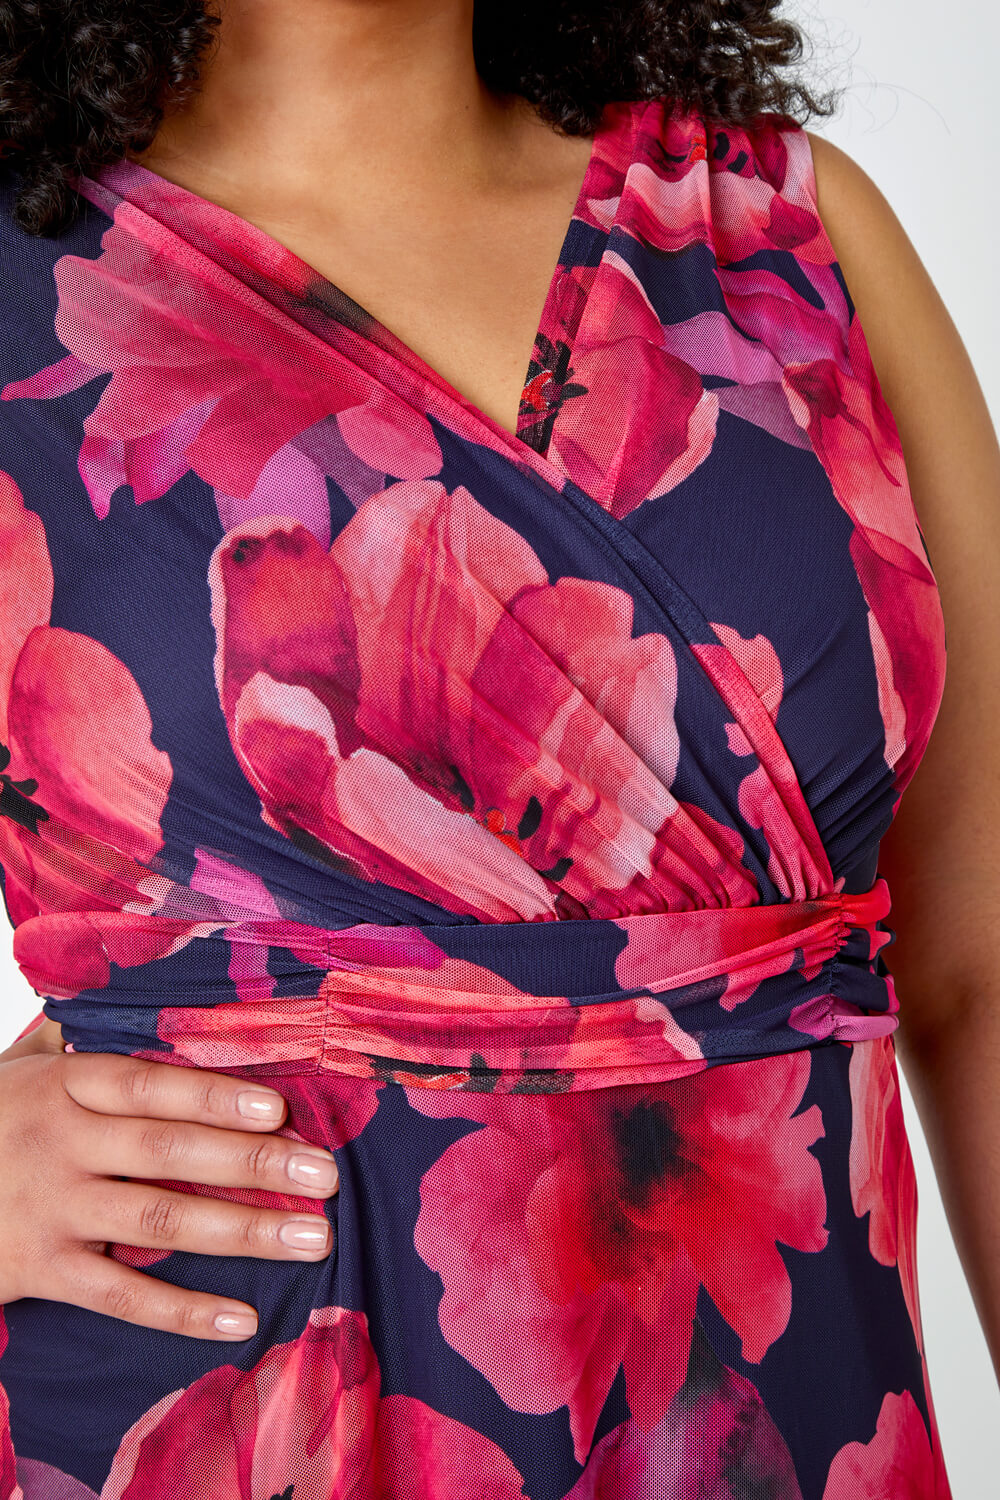 PINK Curve Floral Print Mesh Wrap Dress, Image 5 of 5